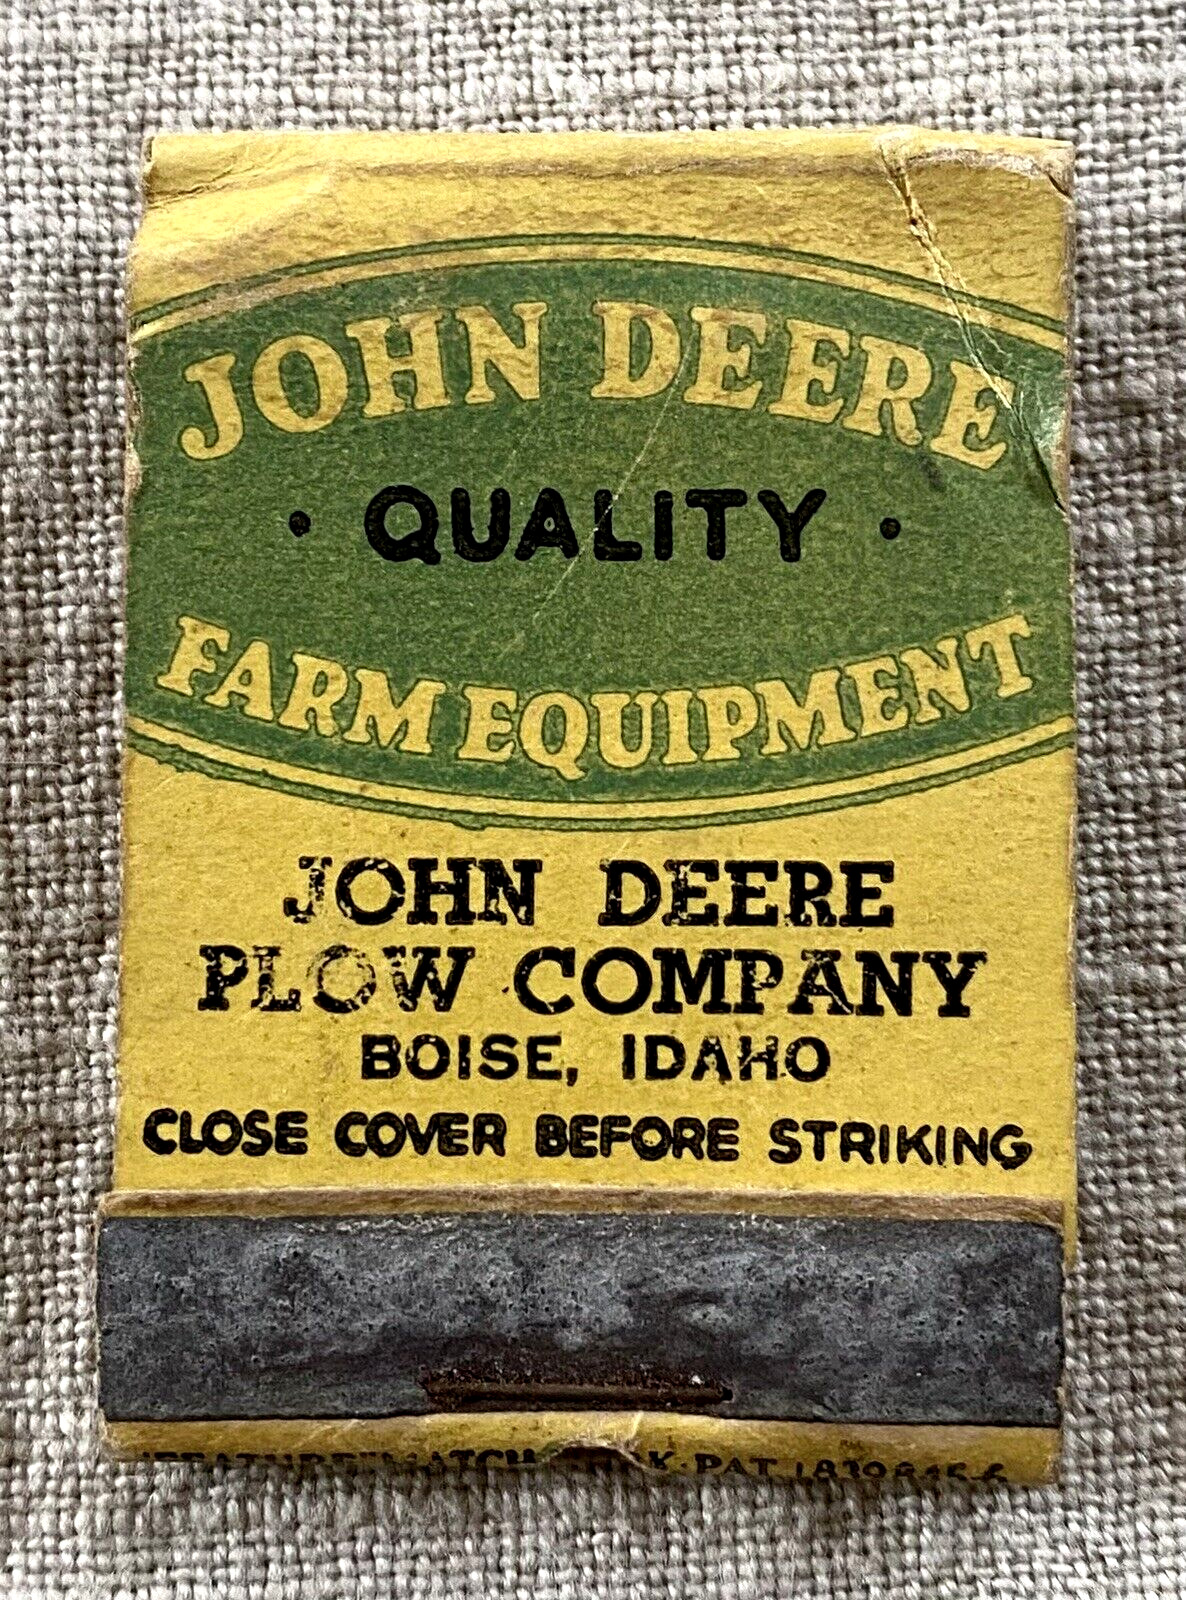 Vtg. John Deere Plow Company BOISE ID Feature Matchbook by Lion Match Co.